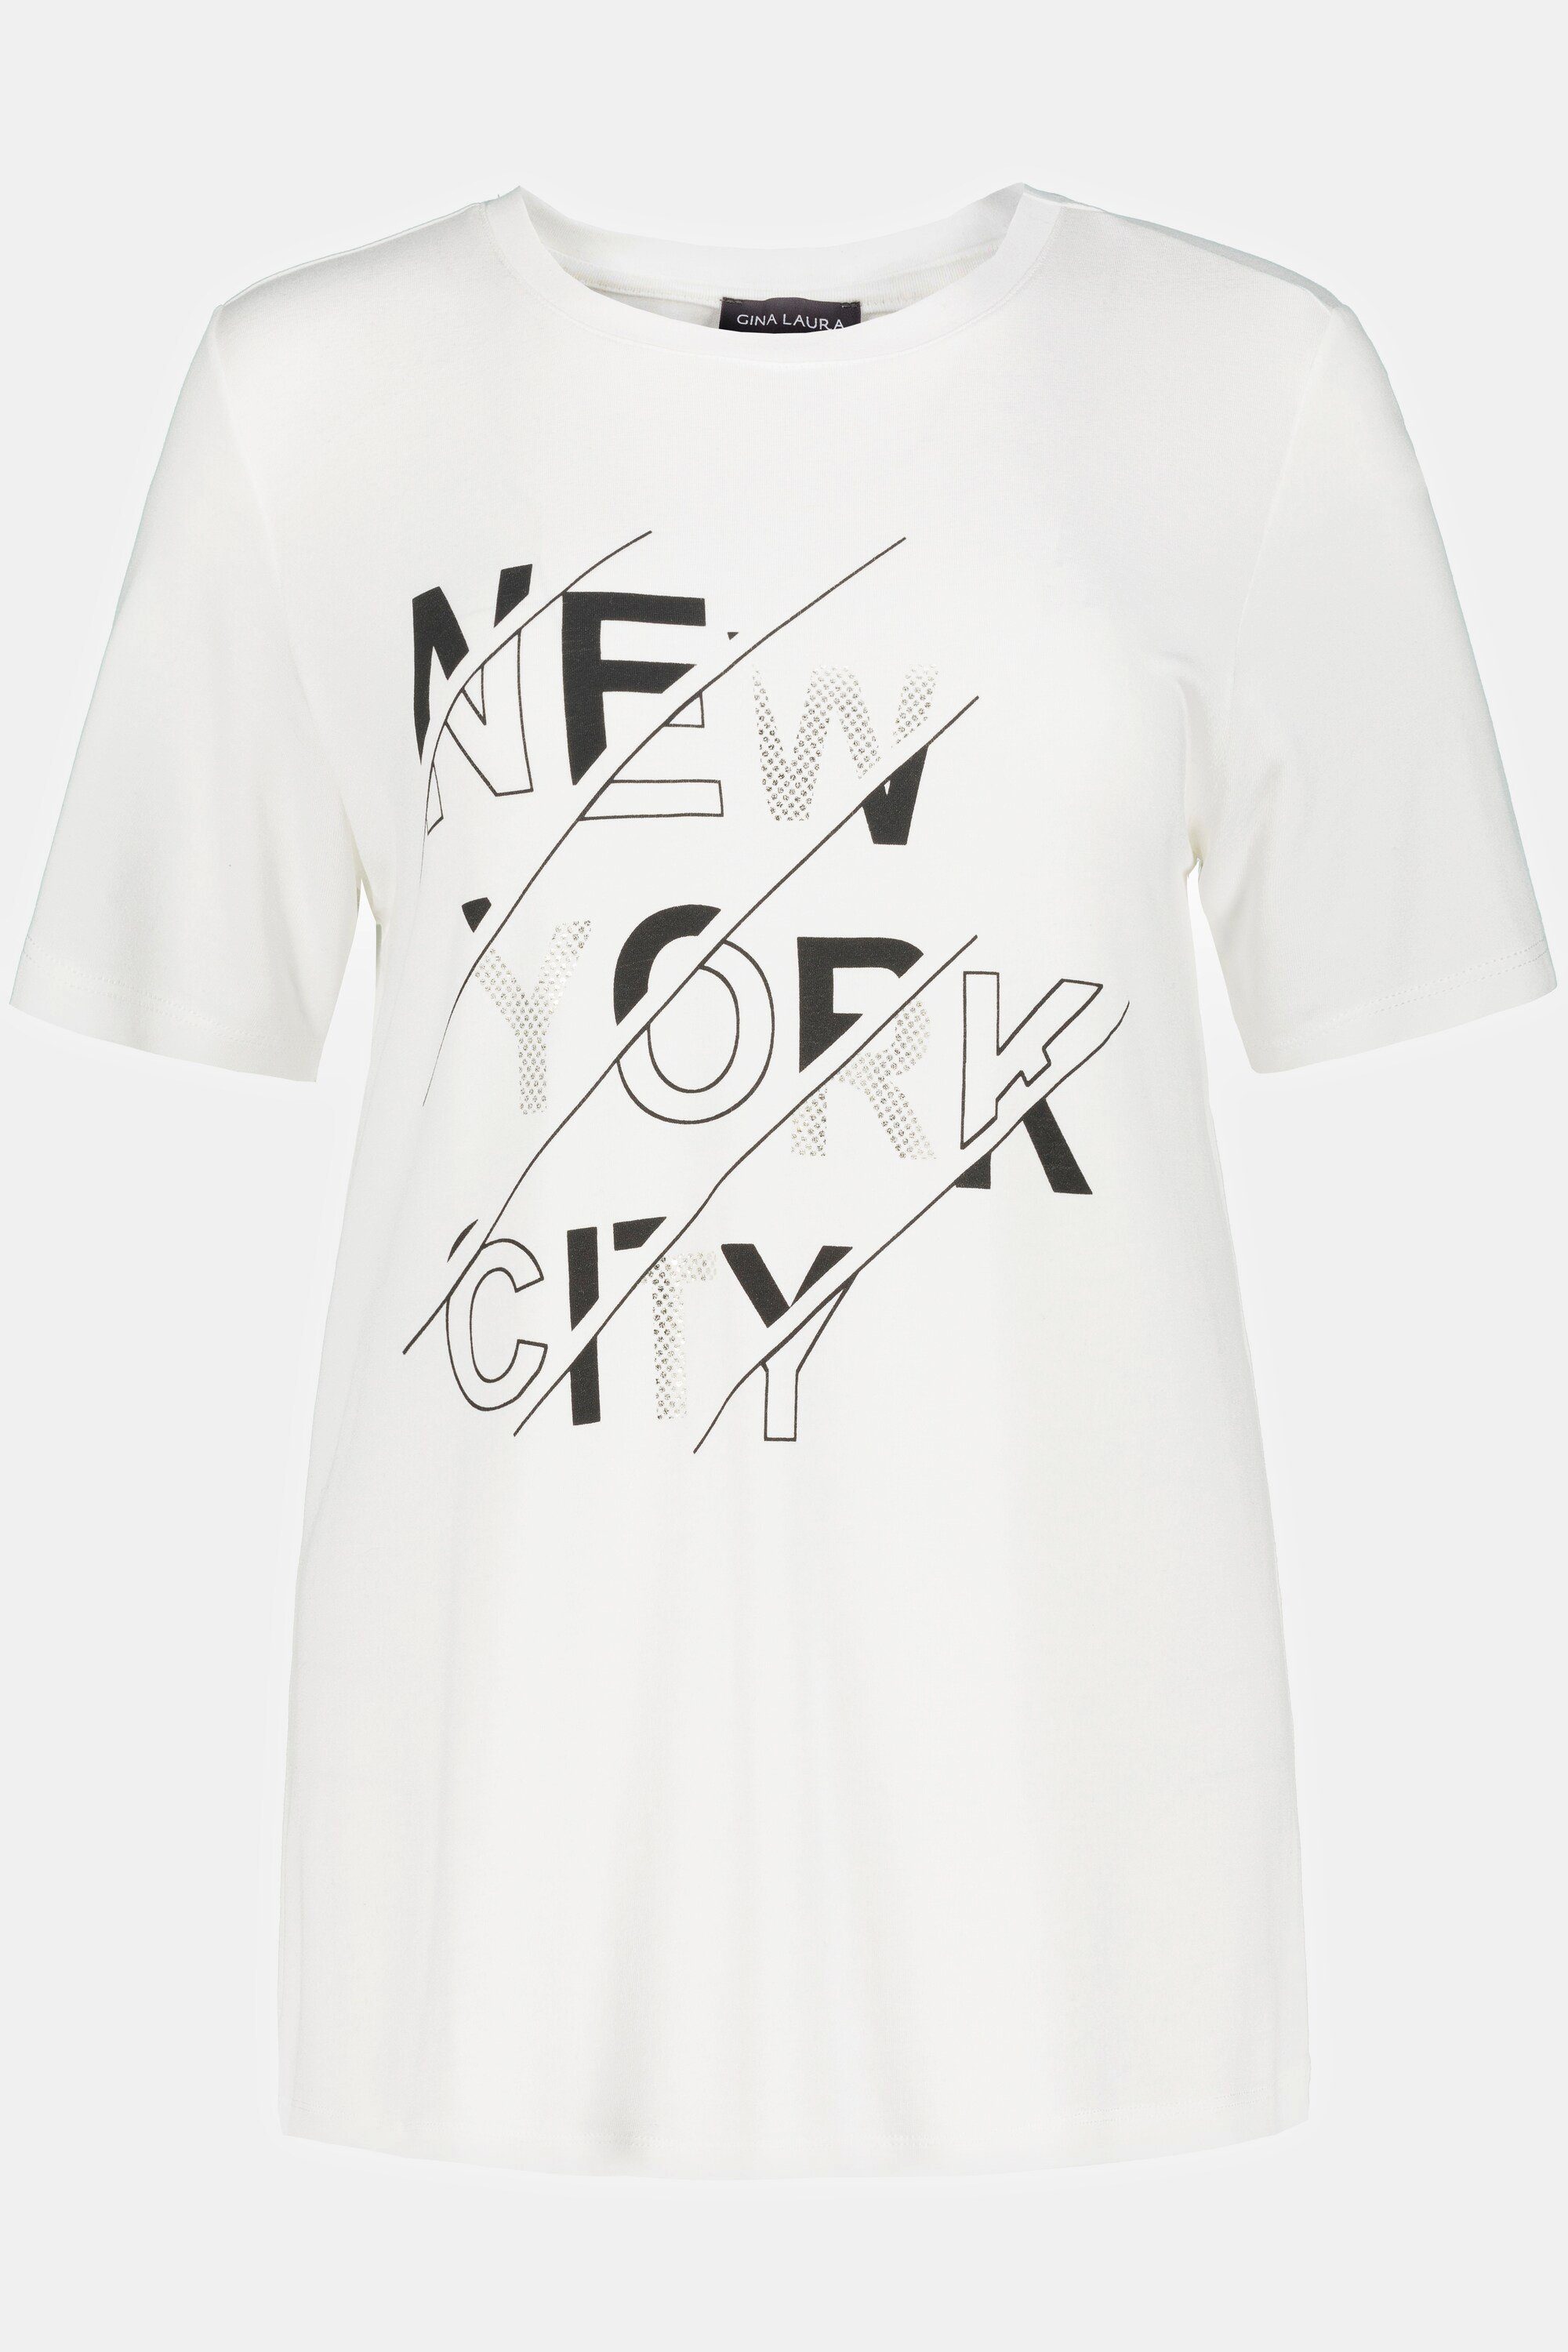 Damen Shirts Gina Laura Rundhalsshirt T-Shirt Identity Motiv New York Rundhals Halbarm